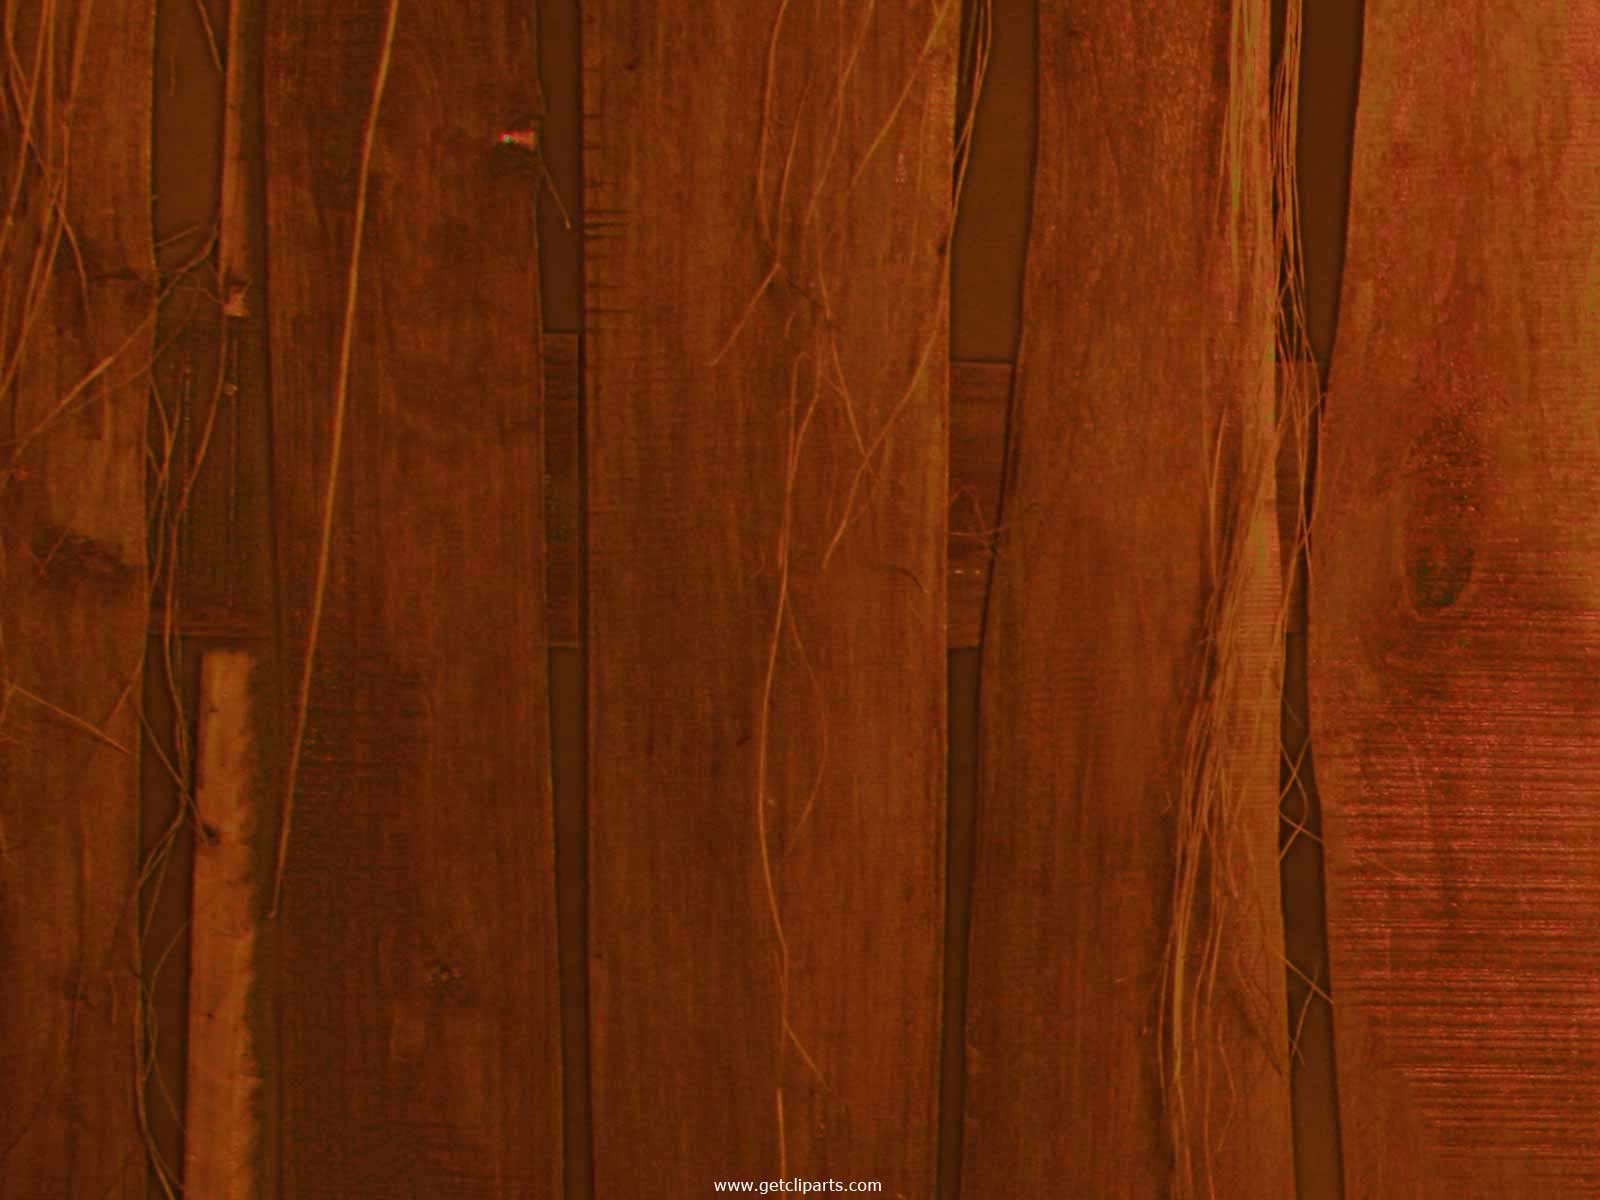 Wallpaper on Wood Furniture - WallpaperSafari